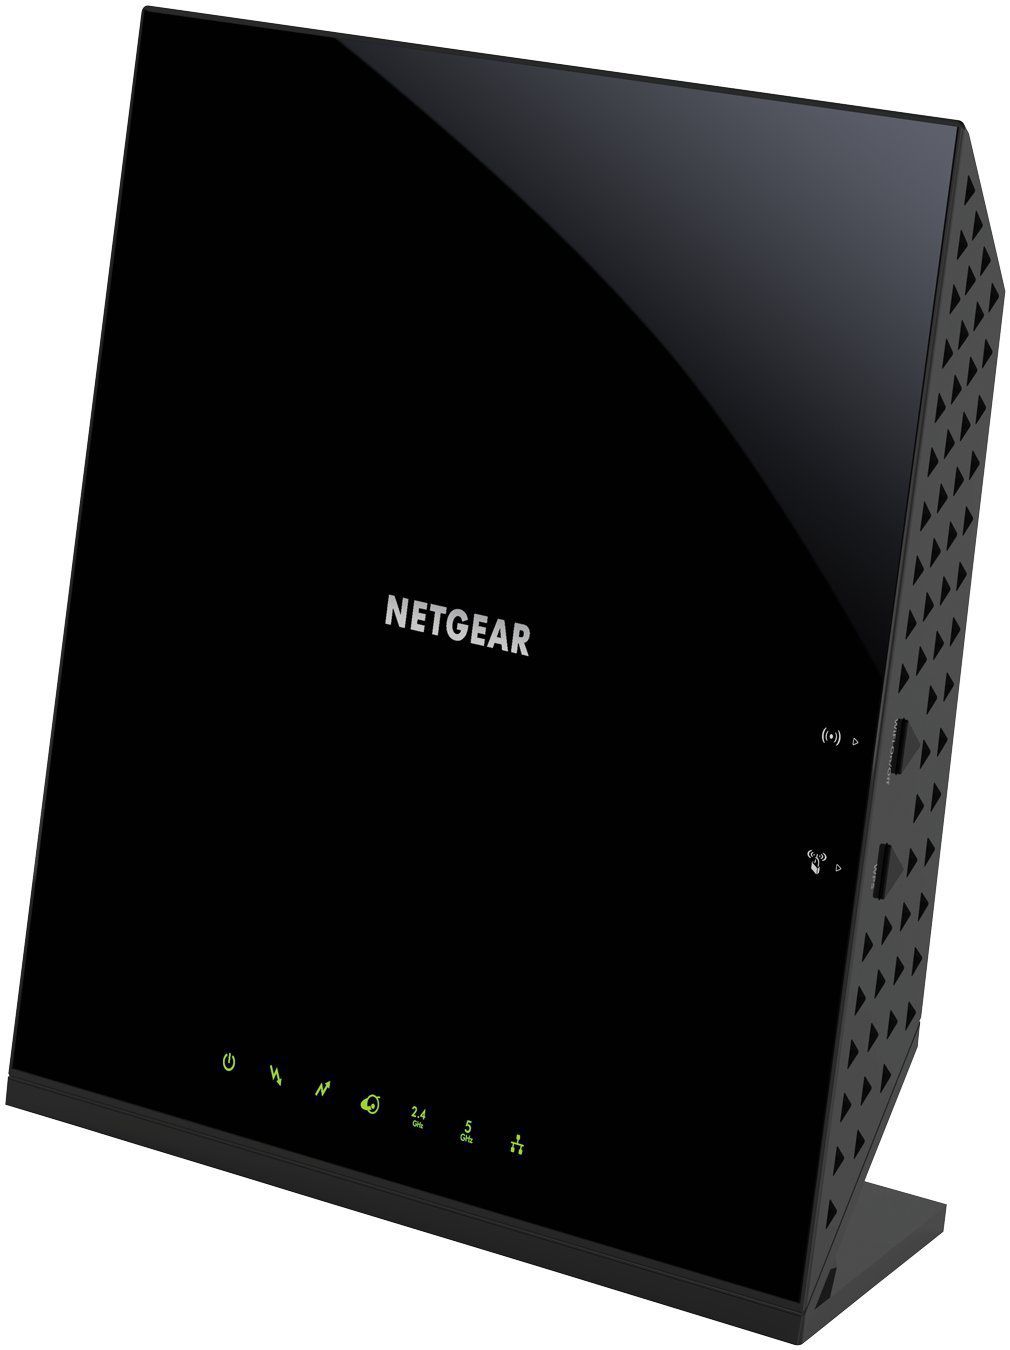 NETGEAR Cable Modem WiFi Router Combo C6250 | Xfinity by Comcast, Spectrum, Cox